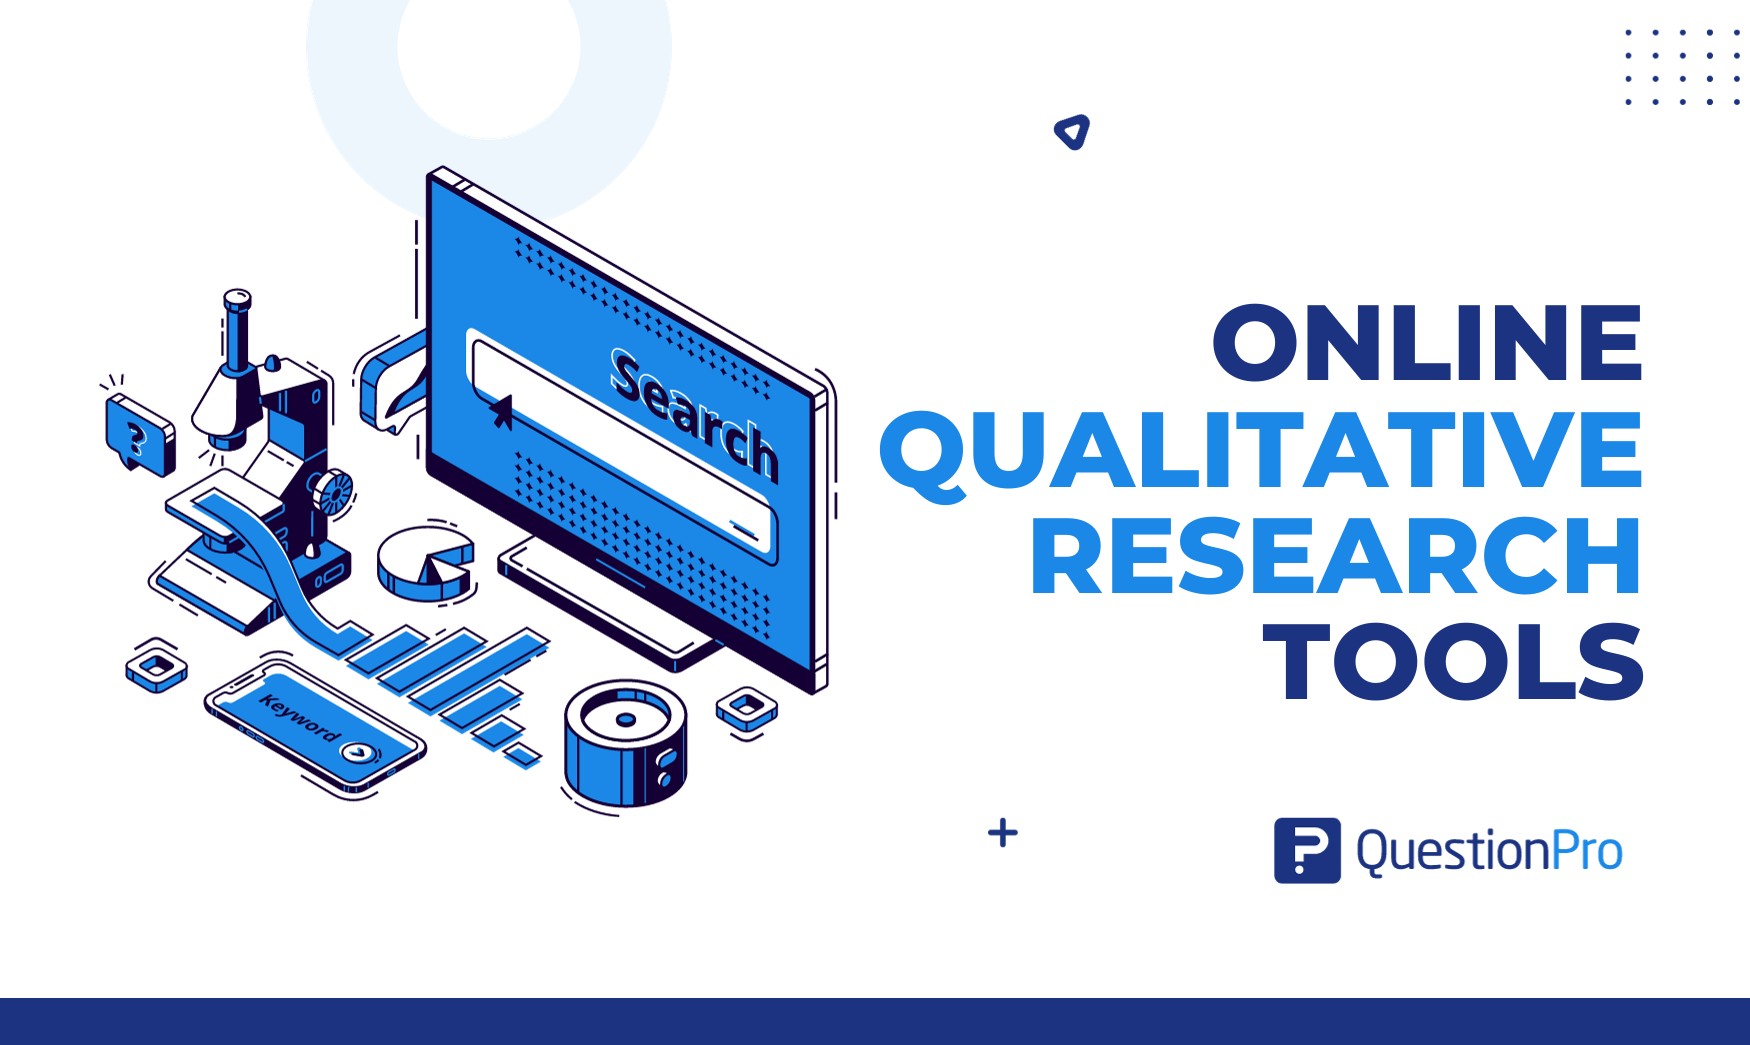 Online Qualitative Research Tools